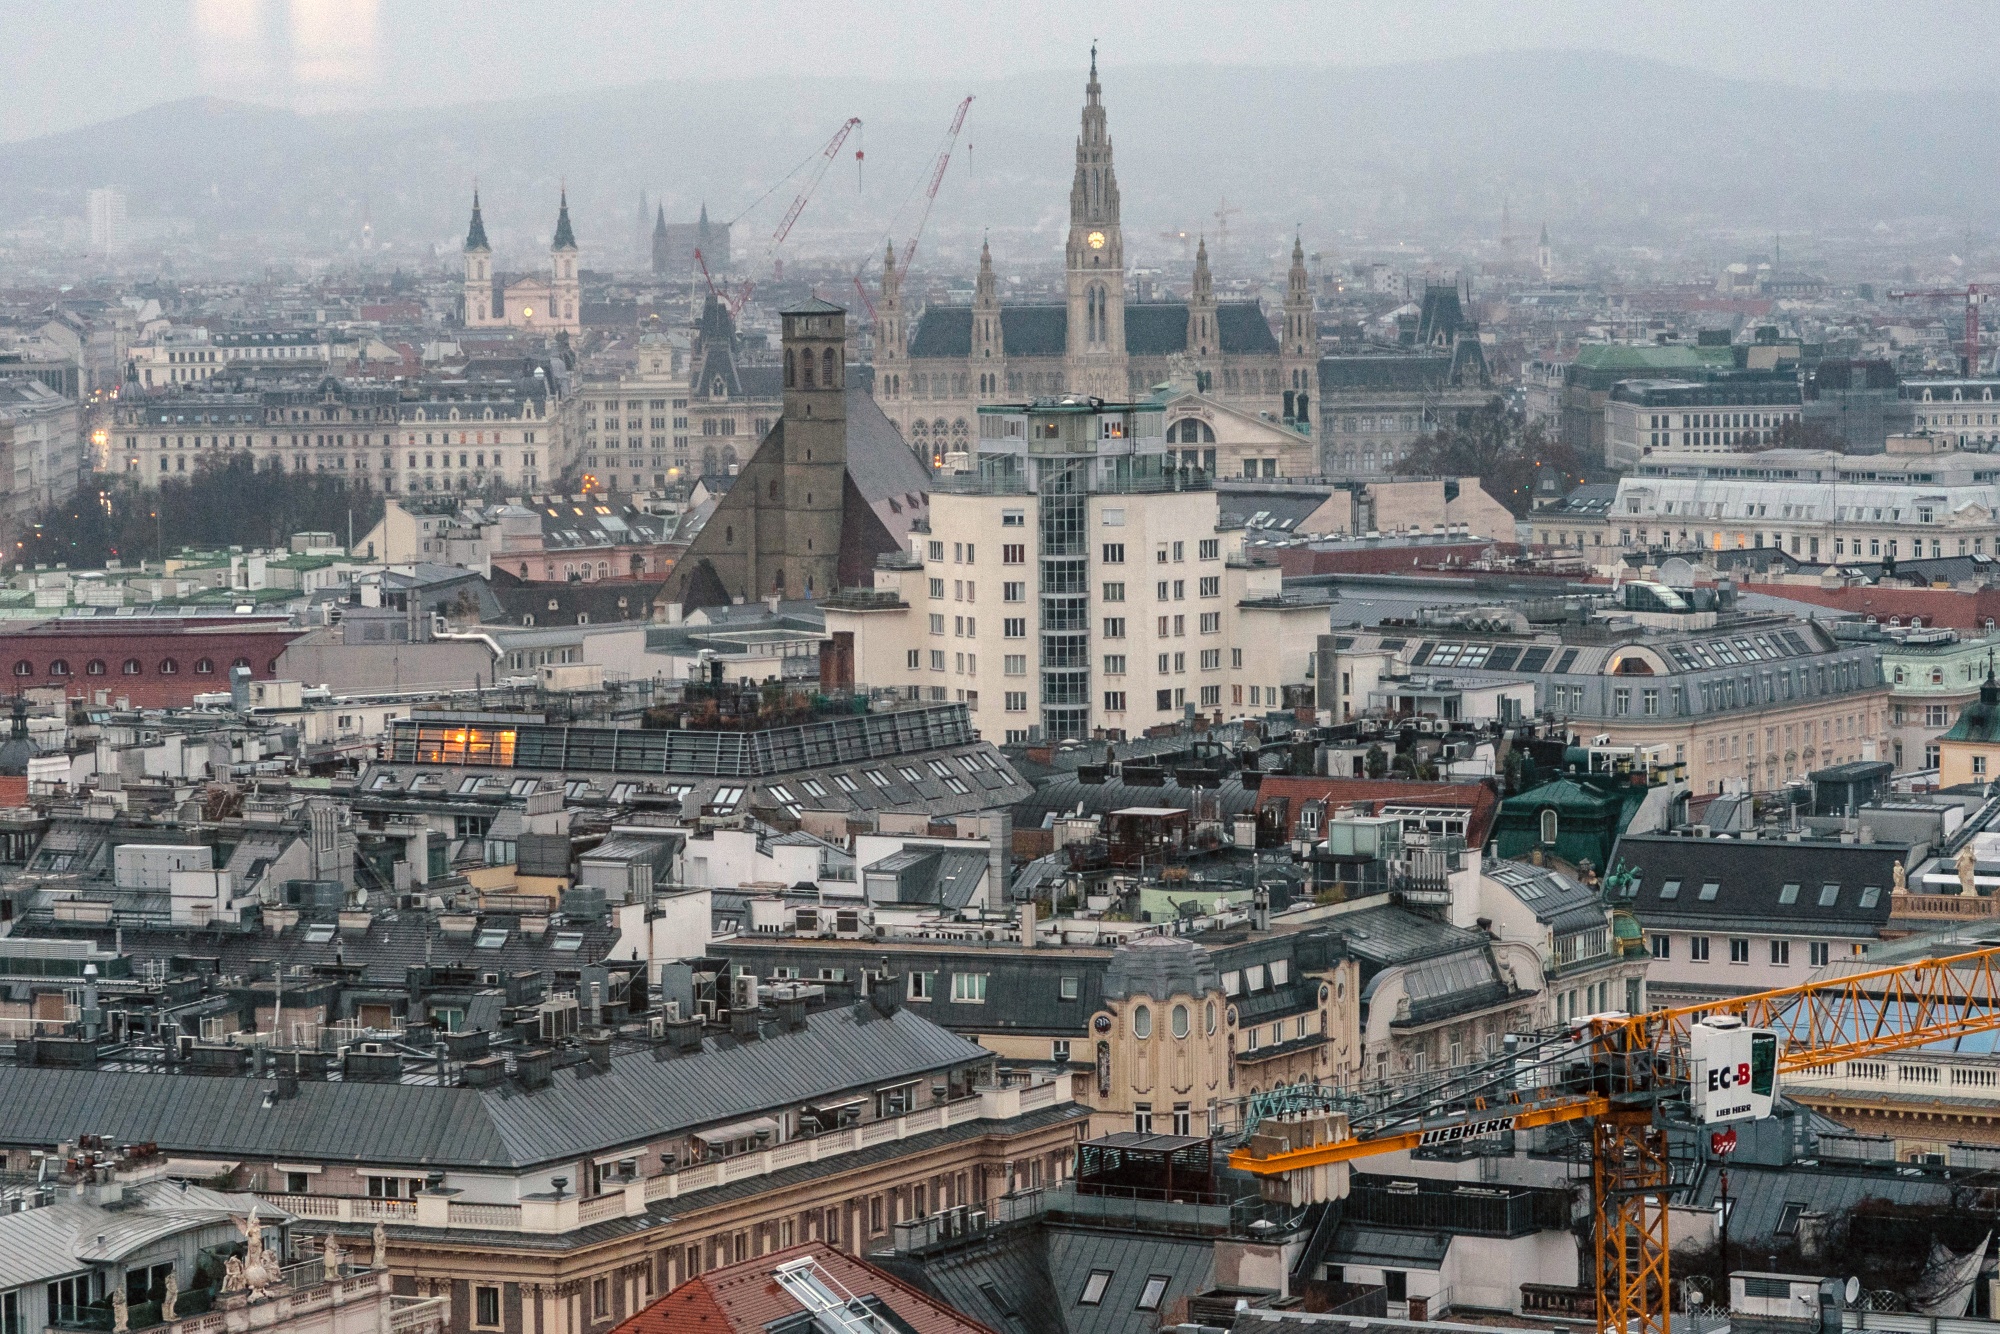 The skyline of Vienna, Austria.